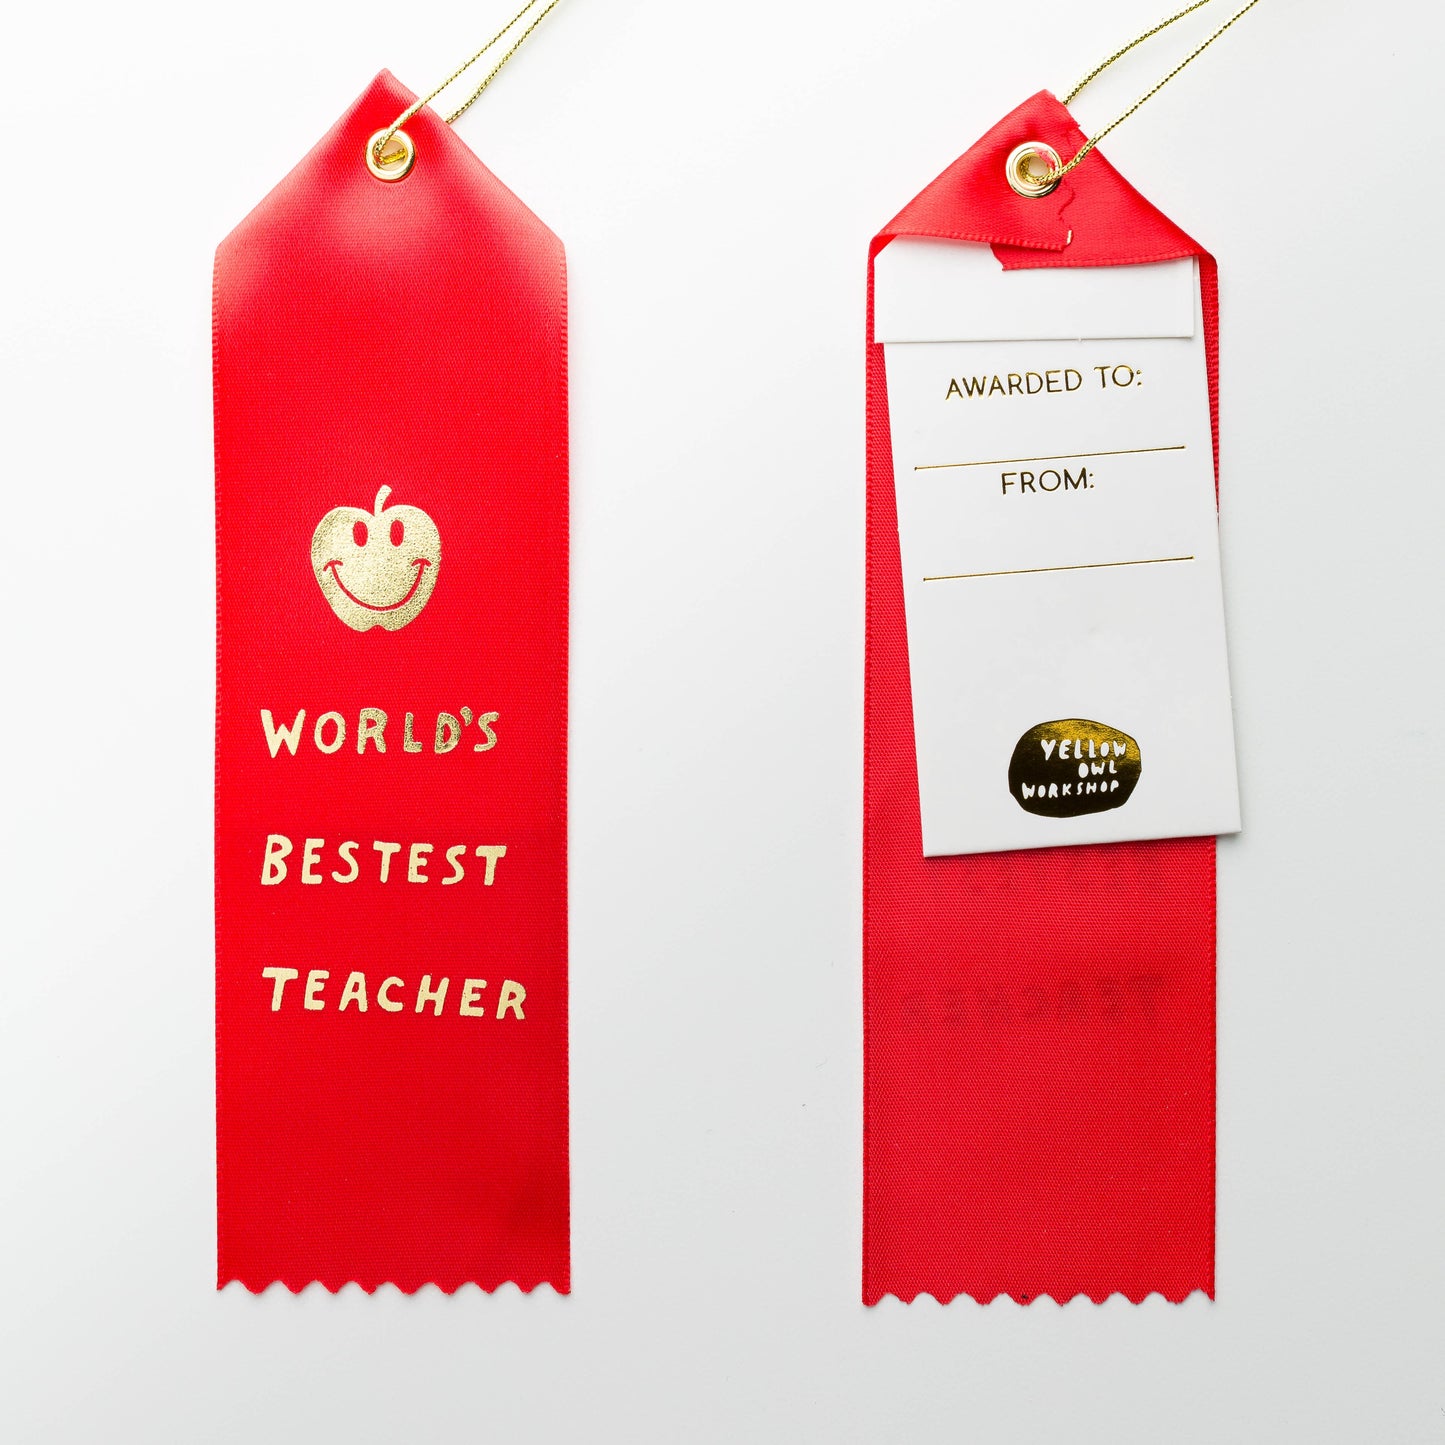 World's Bestest Teacher Award Ribbon